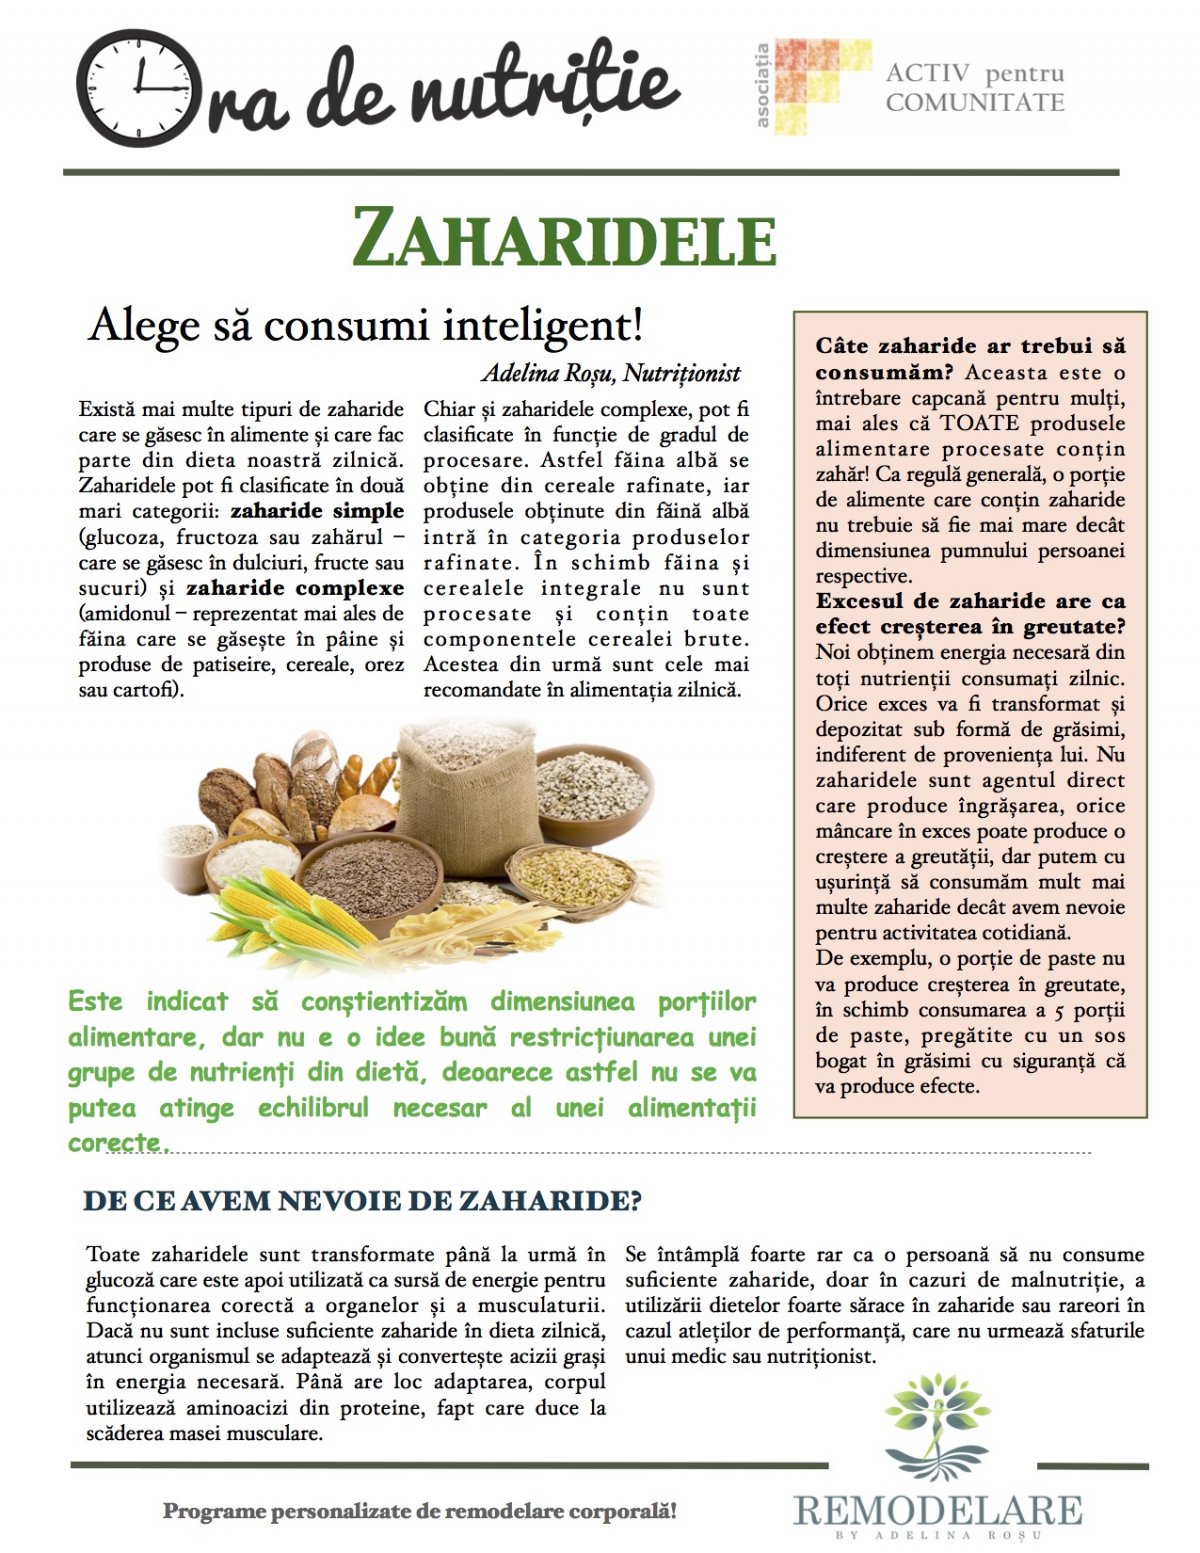 Zaharidele - Alege să consumi inteligent!